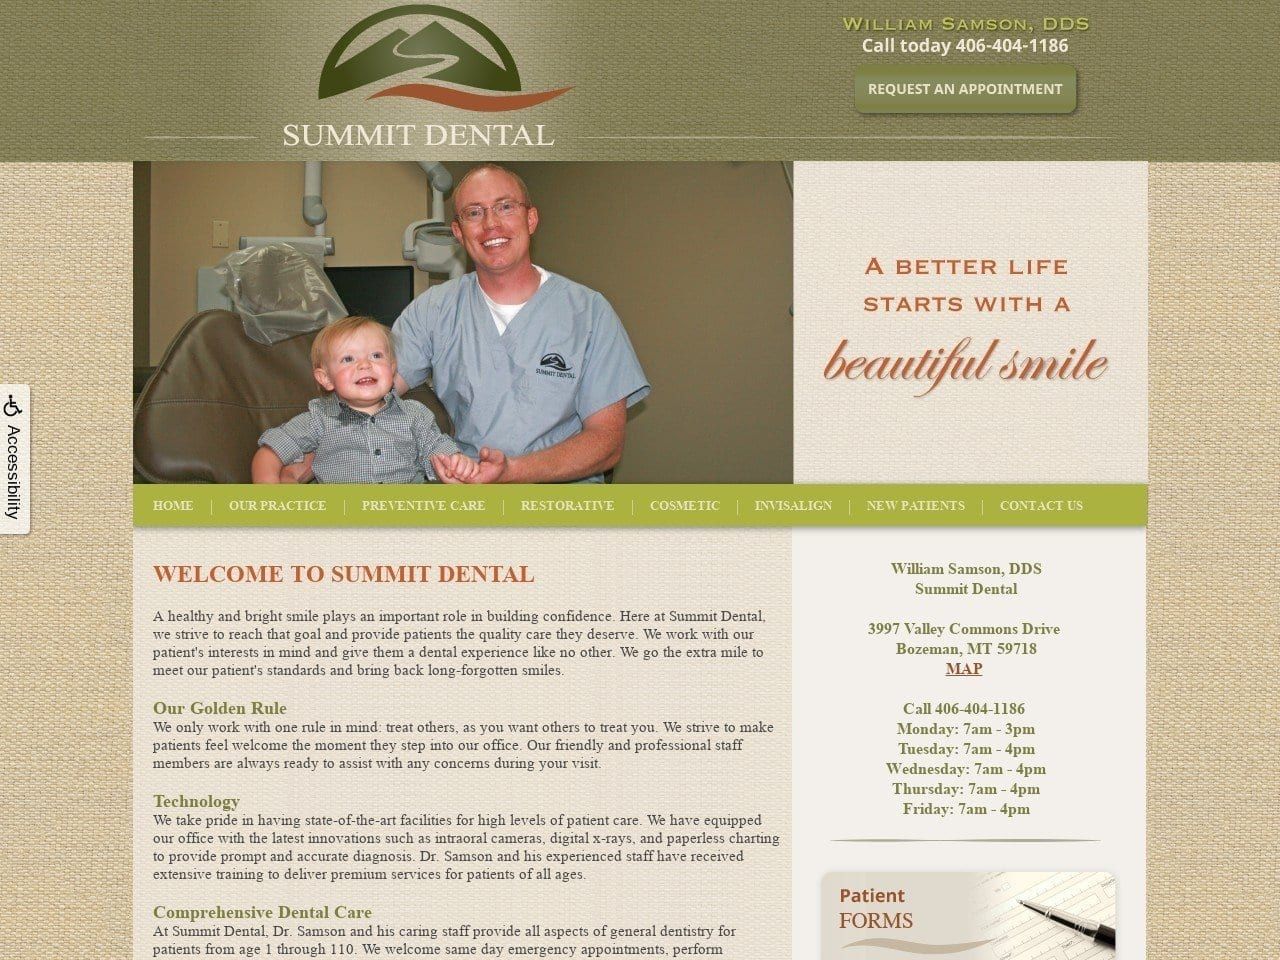 Summit Dental William Samson DDS Website Screenshot from bozemandentalcare.com